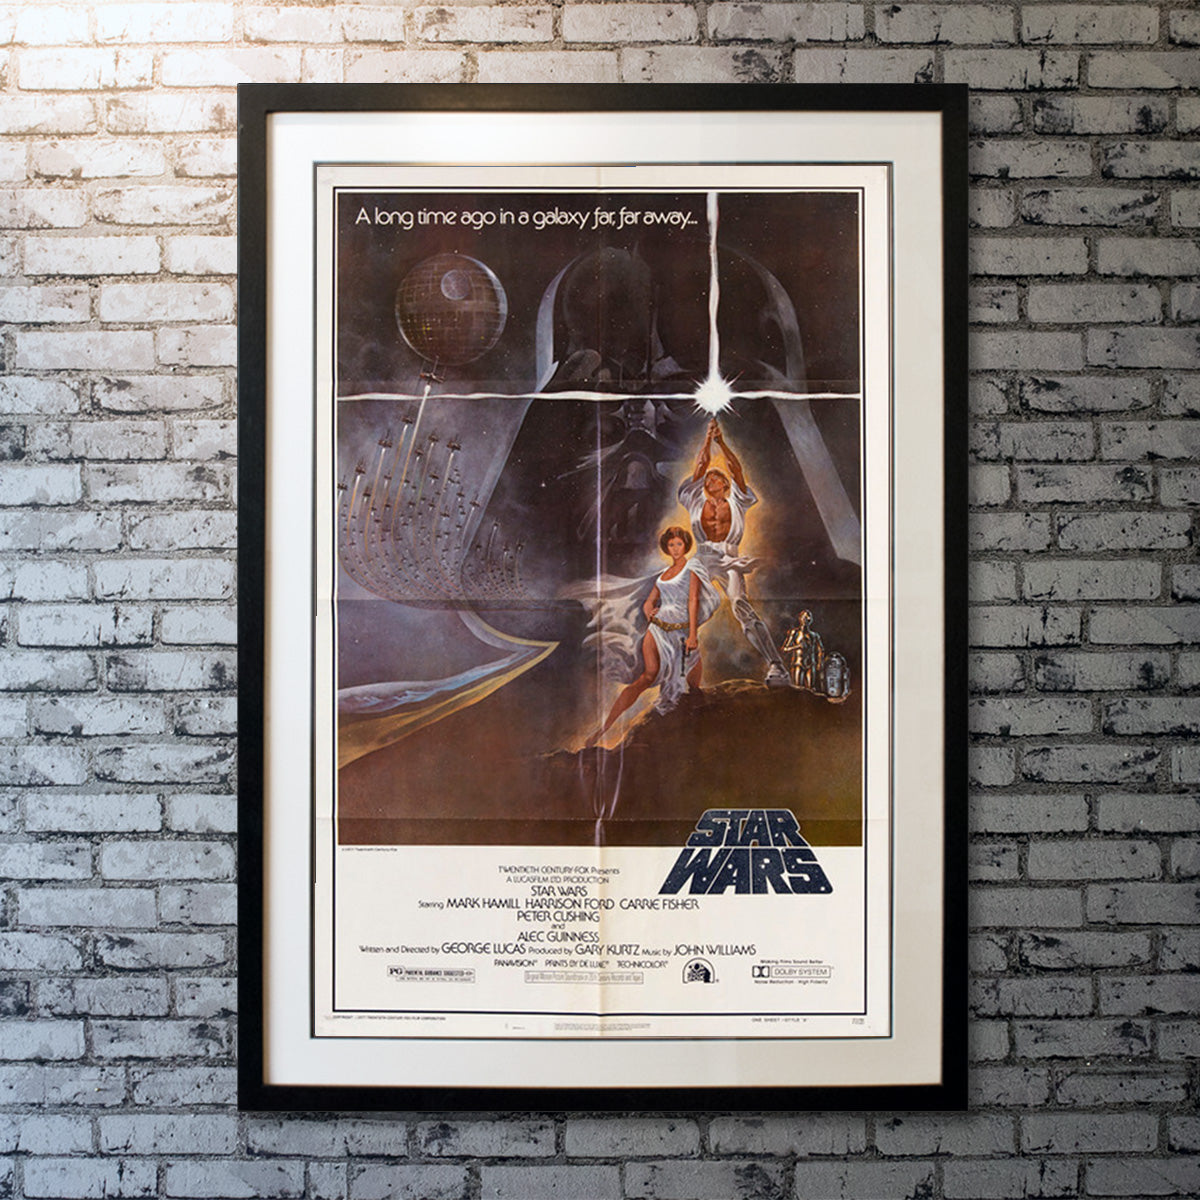 Original Movie Poster of Star Wars (1977)